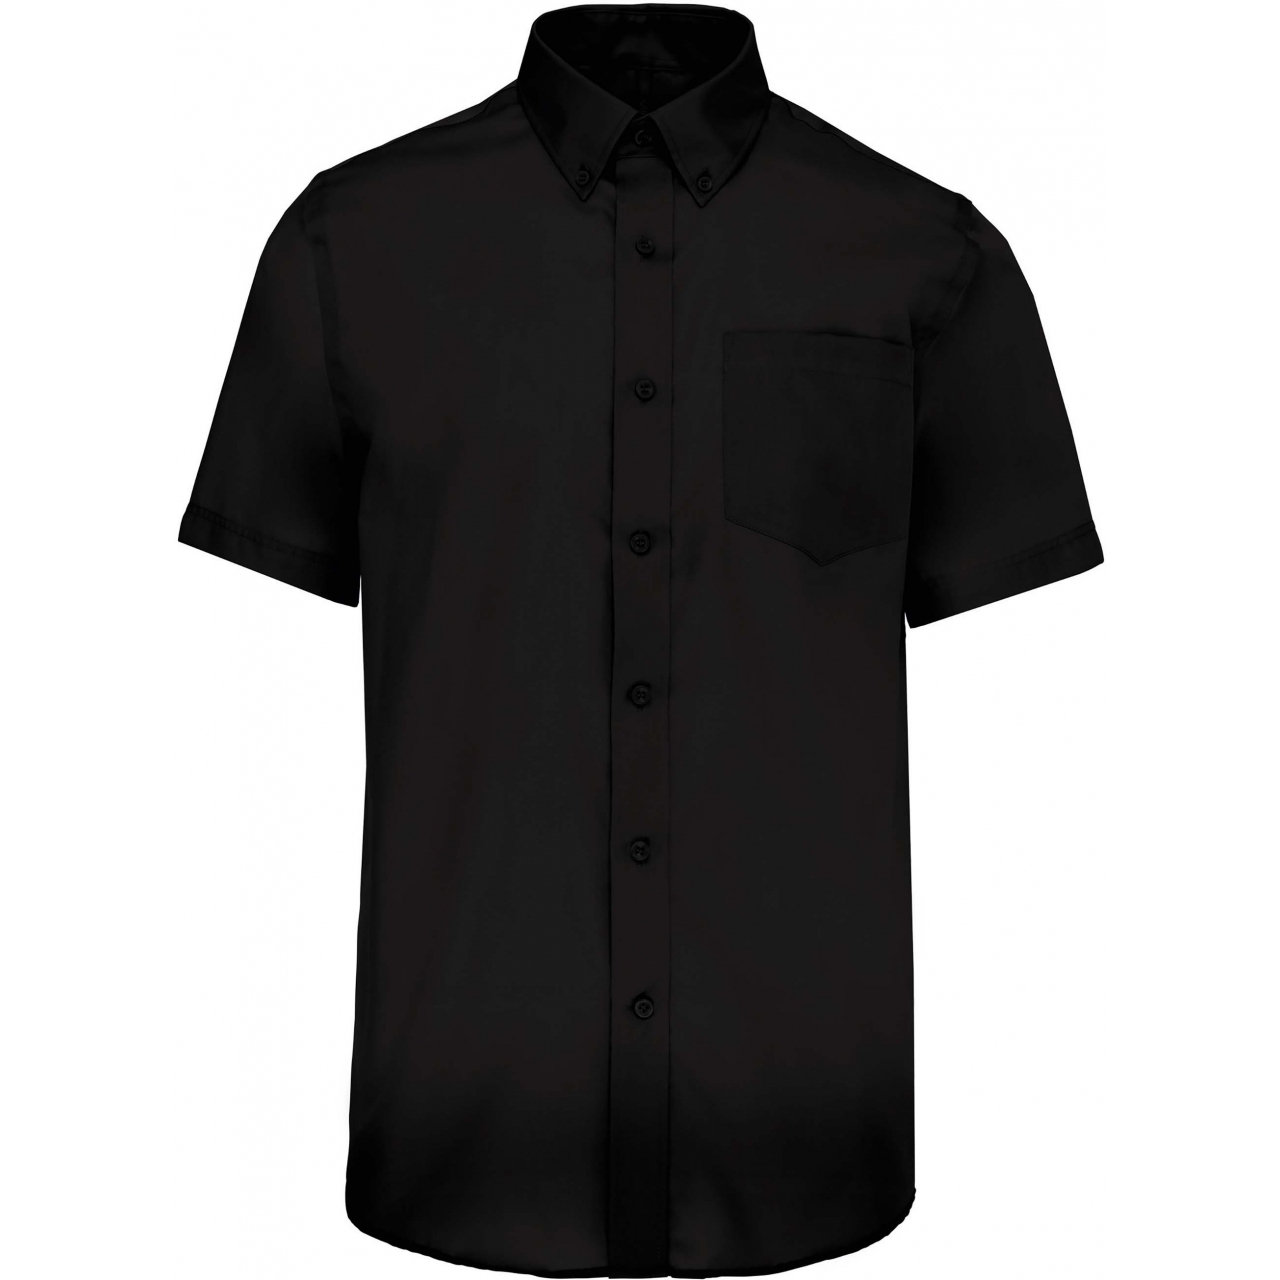 Pánská košile s krátkým rukávem Kariban Premium - černá, M